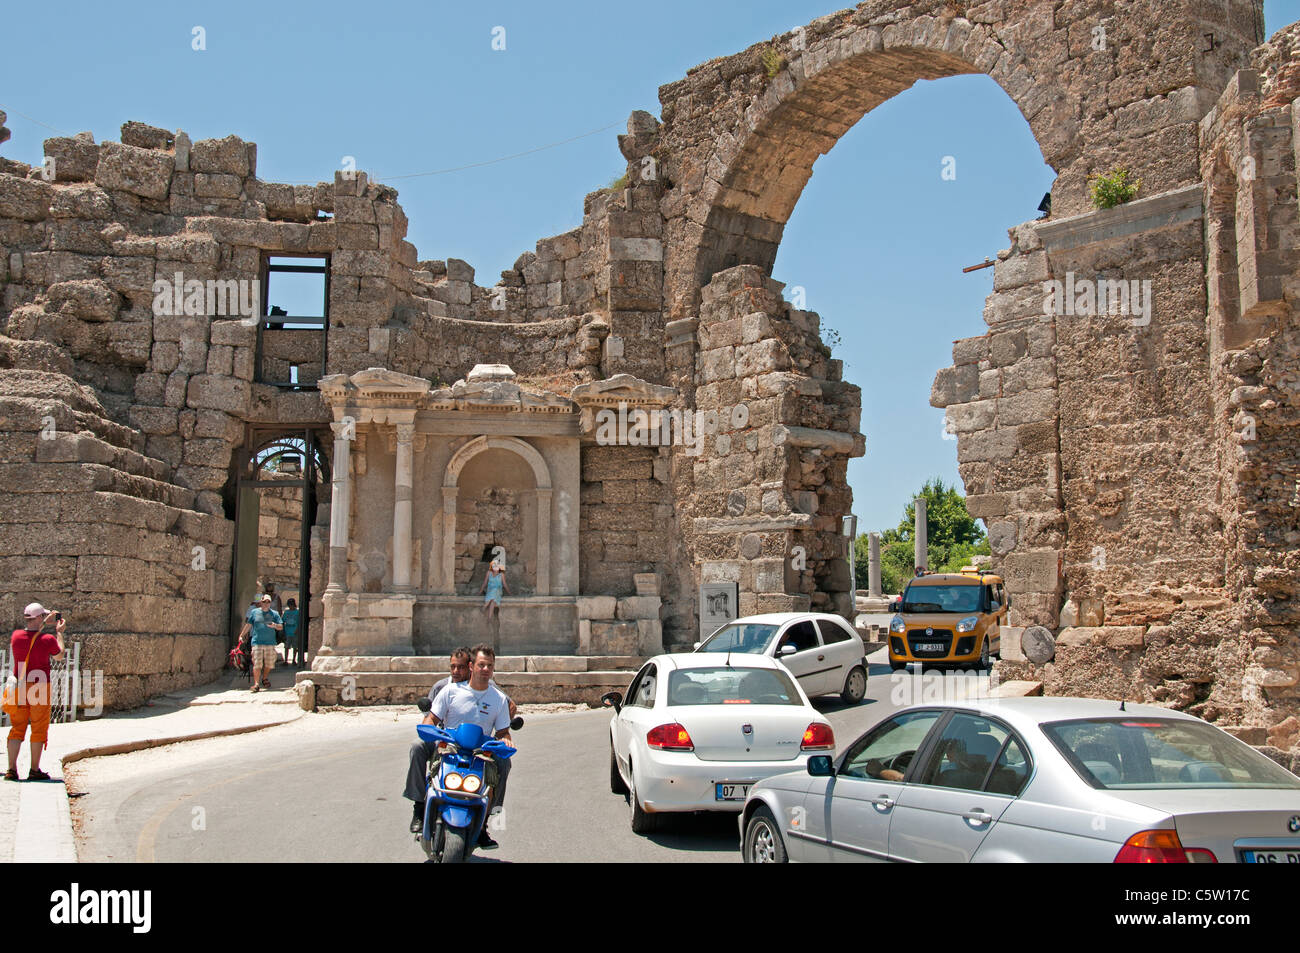 Side Turkey Ruins Roman Arch archeology Town City Stock Photo